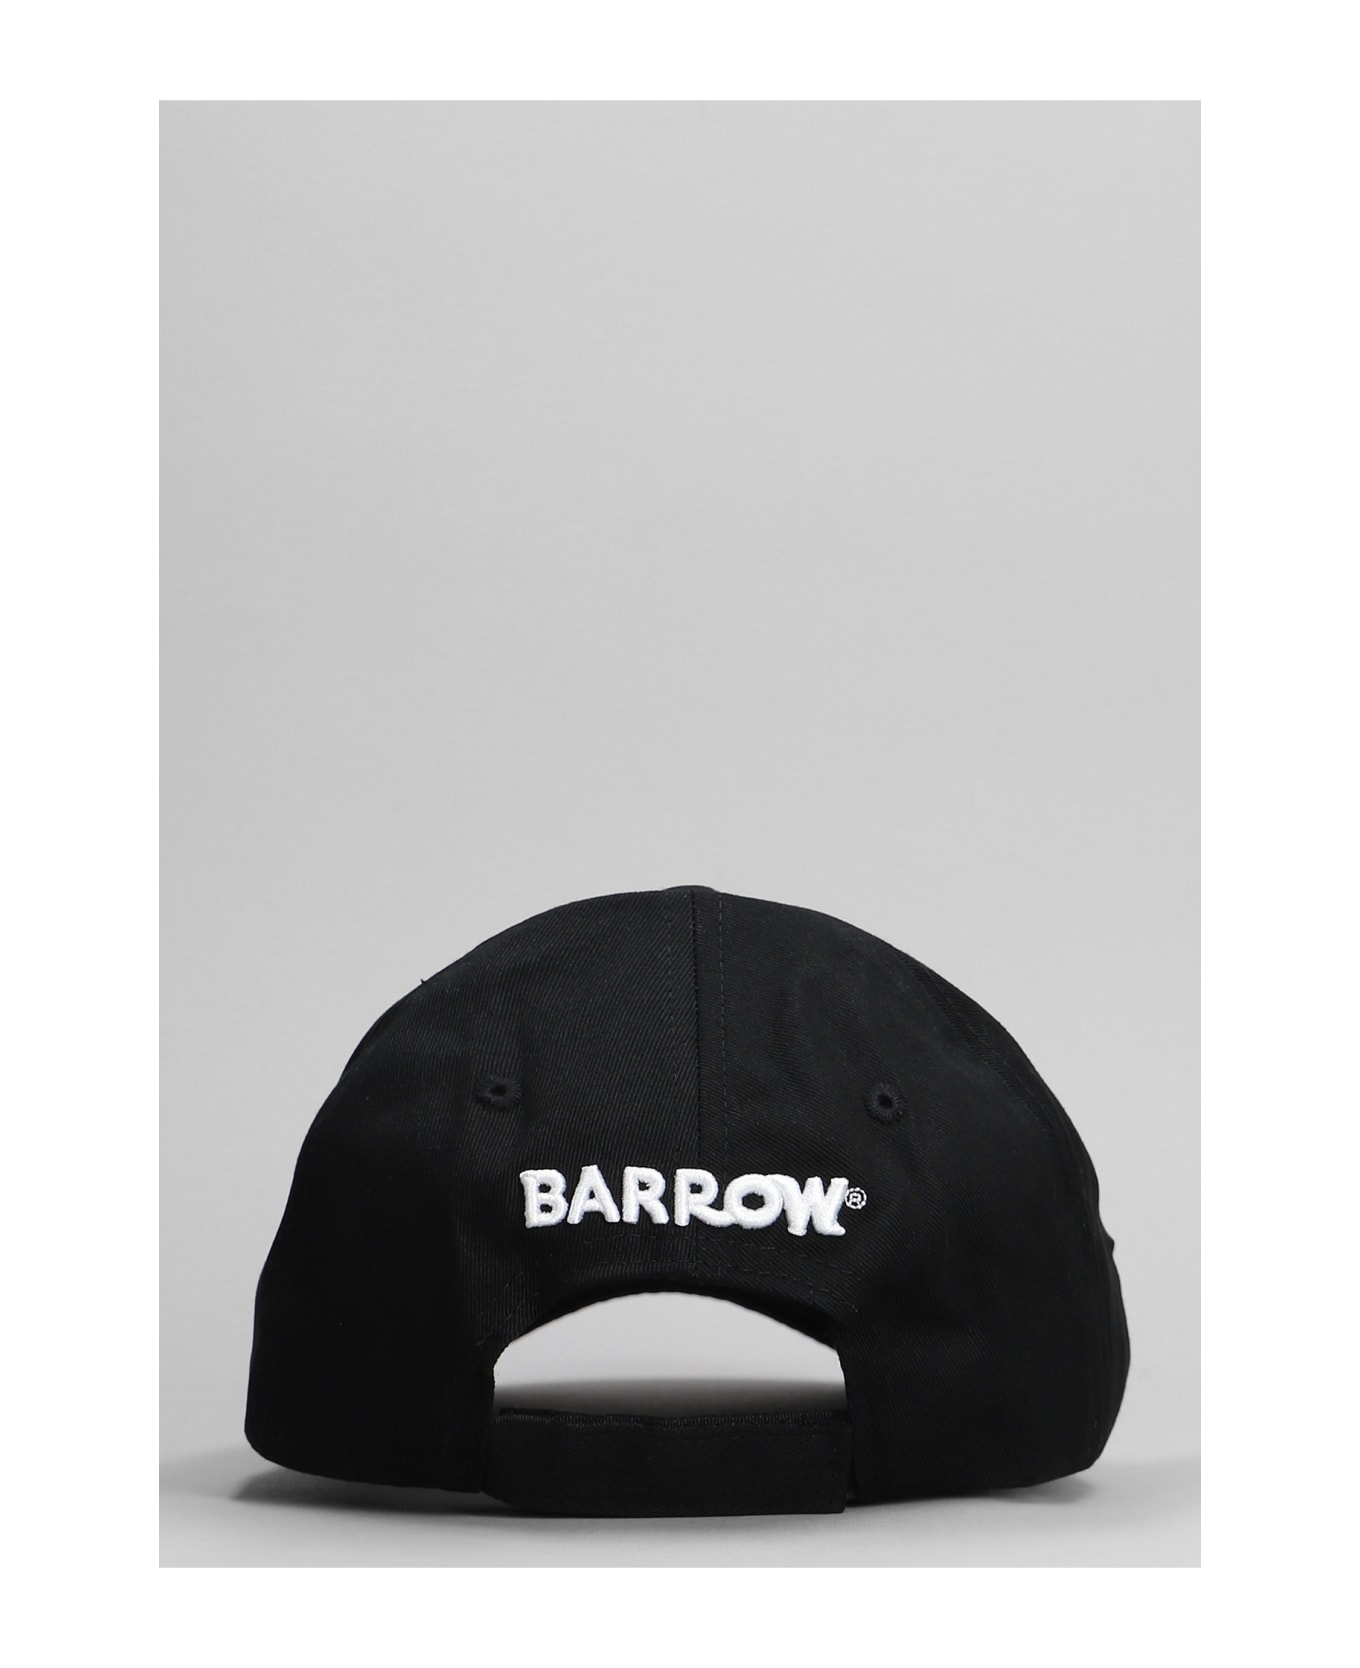 Barrow Black Cotton Hat - Black